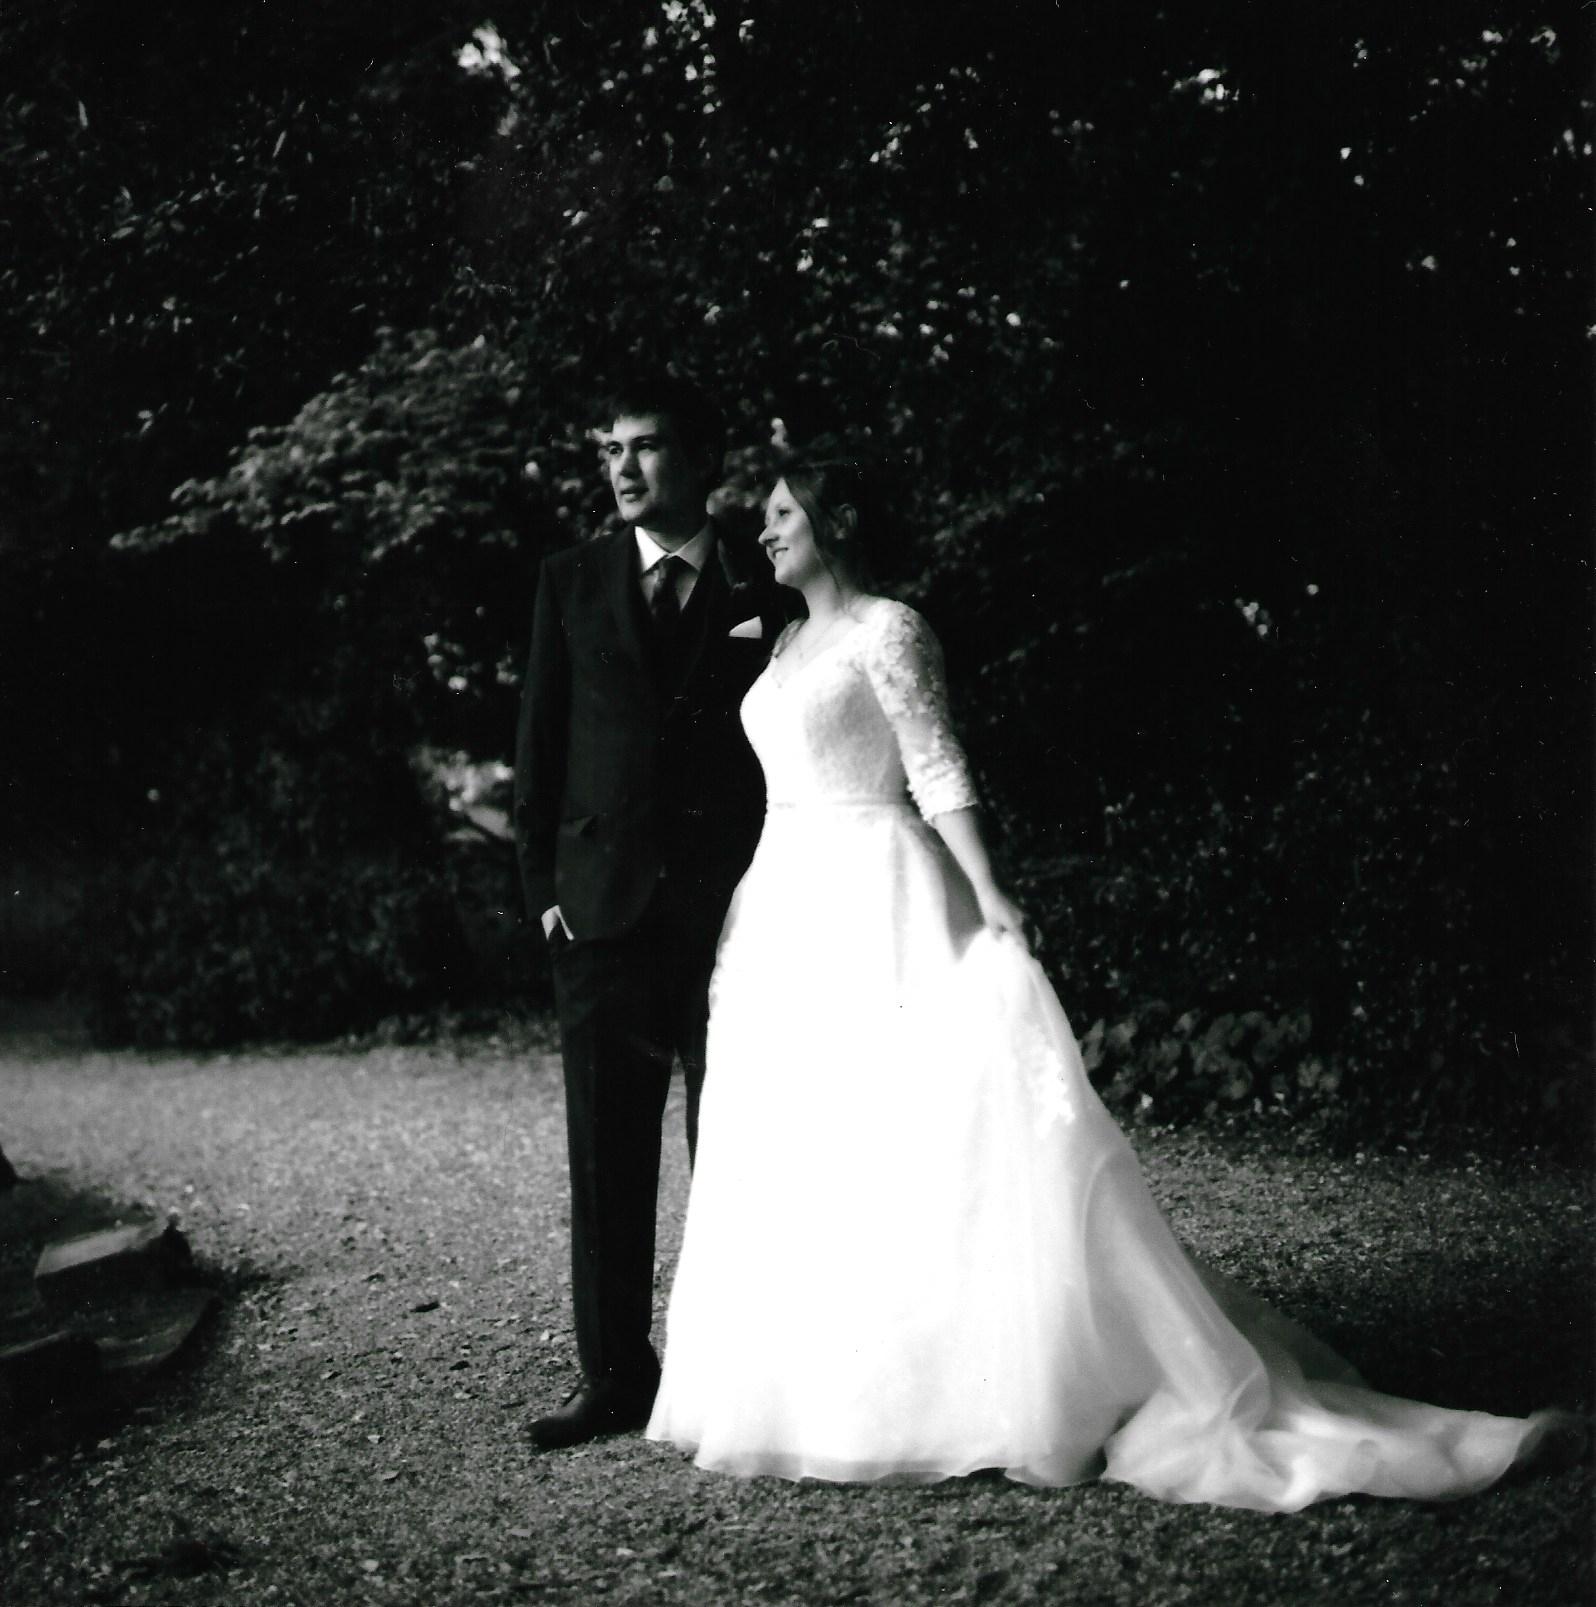 Bride and Groom shot of medium format film camera at Highcliffe castle wedding